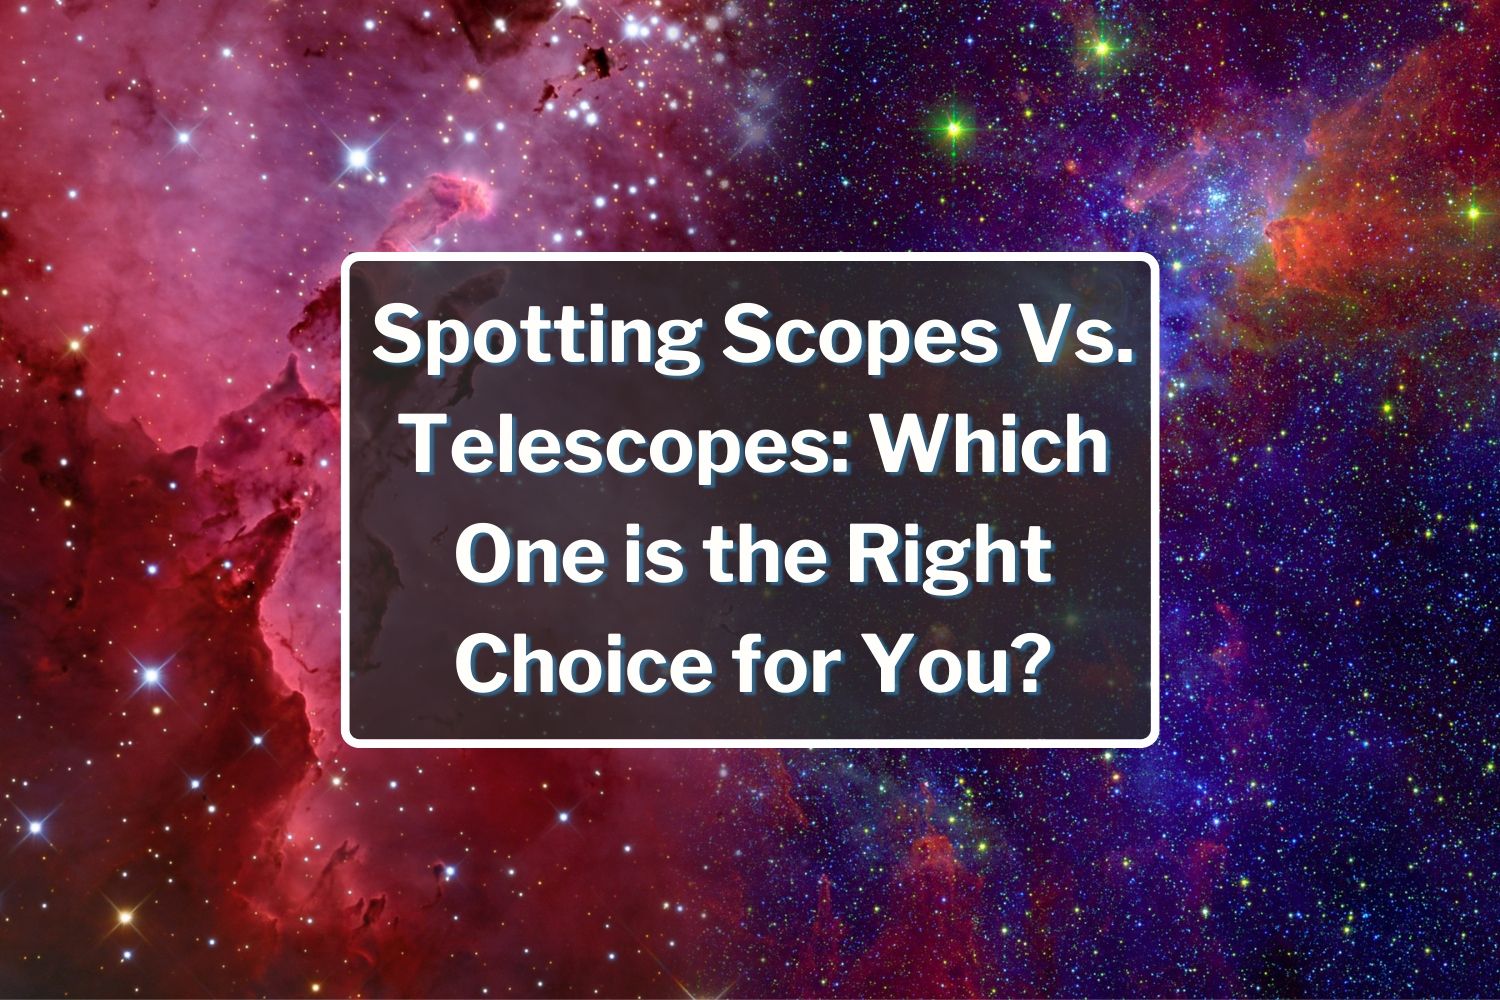 Spotting Scopes Vs. Telescopes